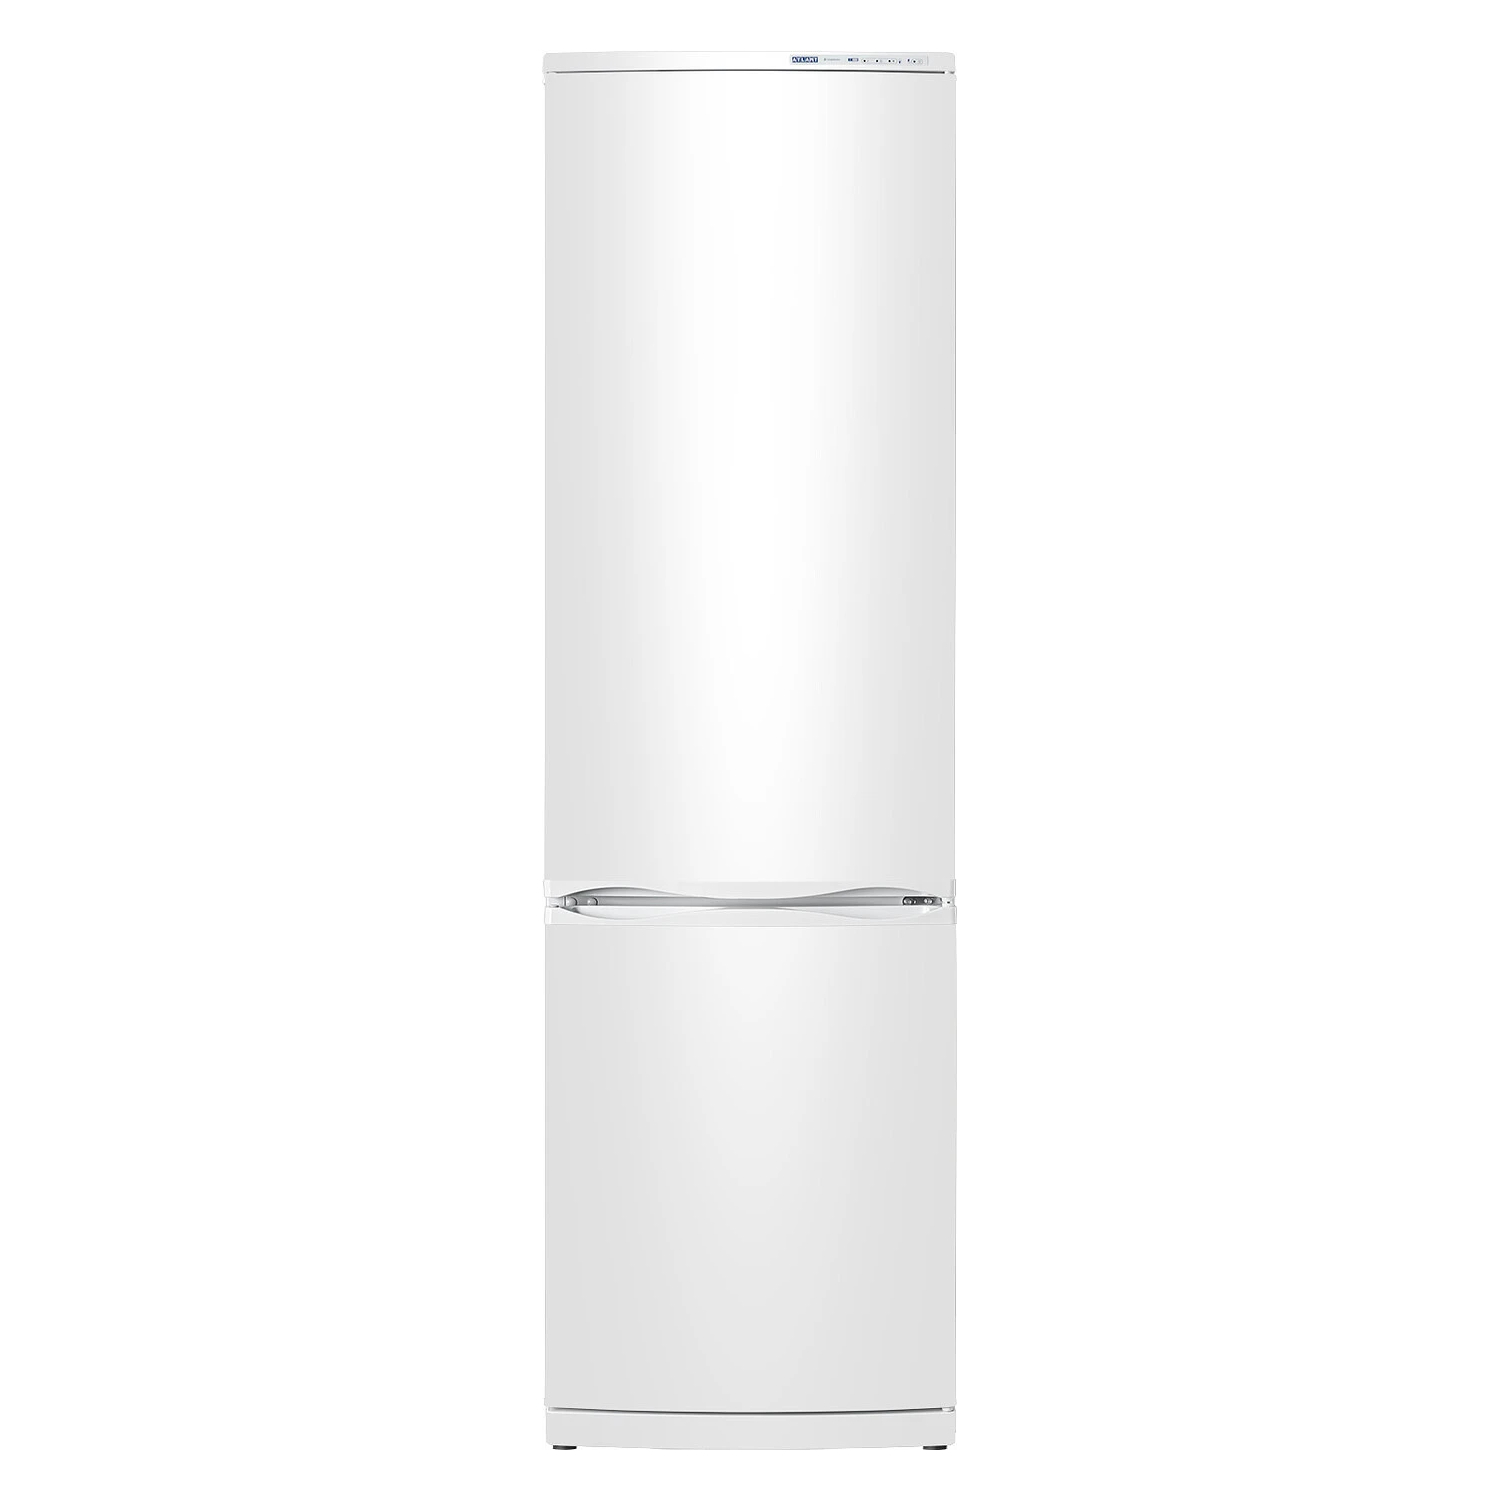 Холодильник Атлант XM-6026-031 белый холодильник атлант xm 6026 031 белый